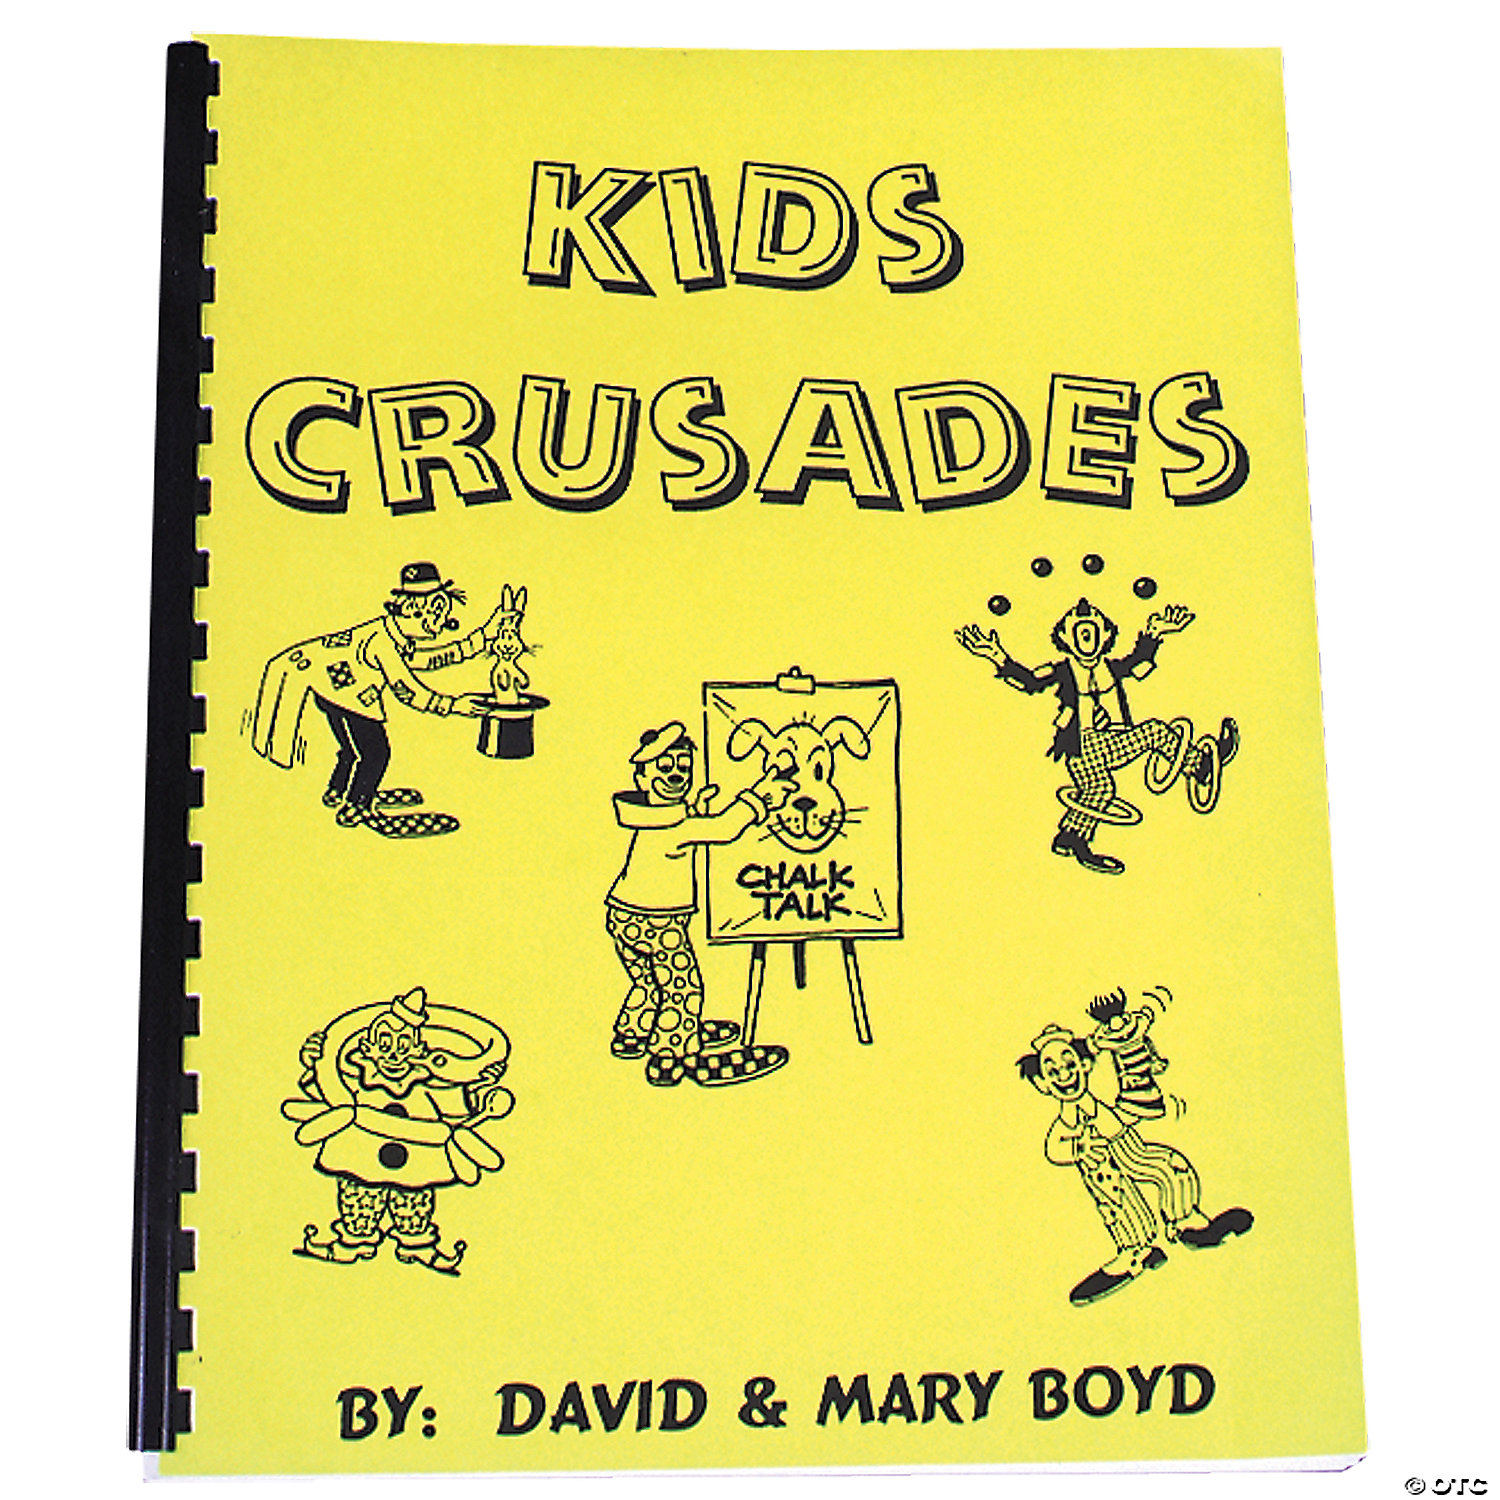 KIDS CRUSADES BY DAVID BOYD - HALLOWEEN